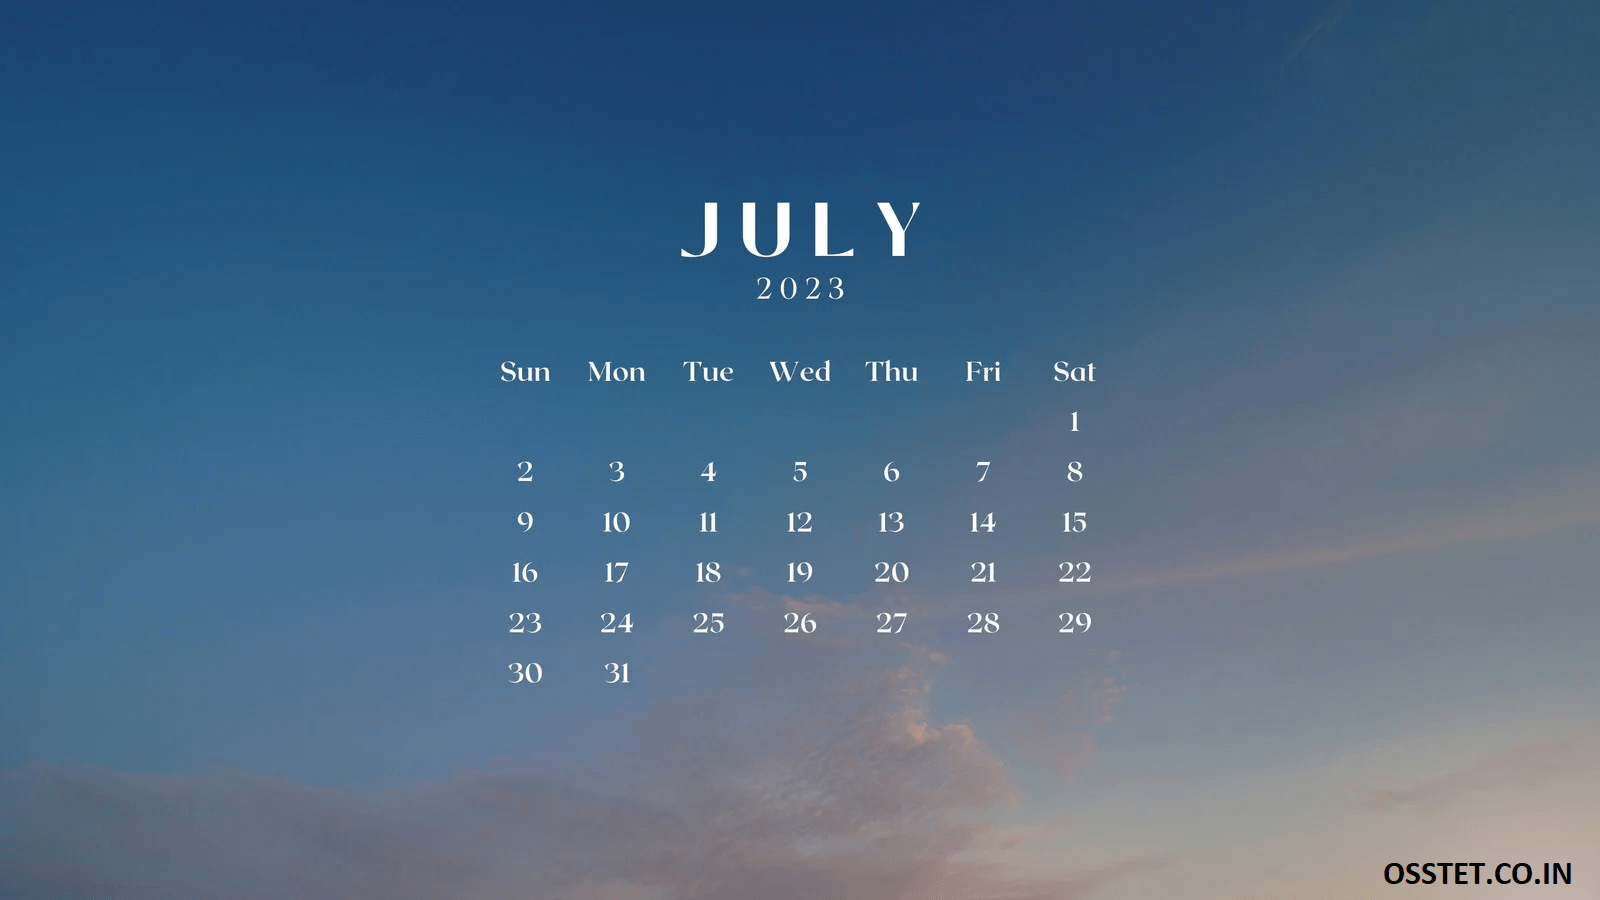 FREE] 25+ July 2023 Desktop Calendar Wallpapers